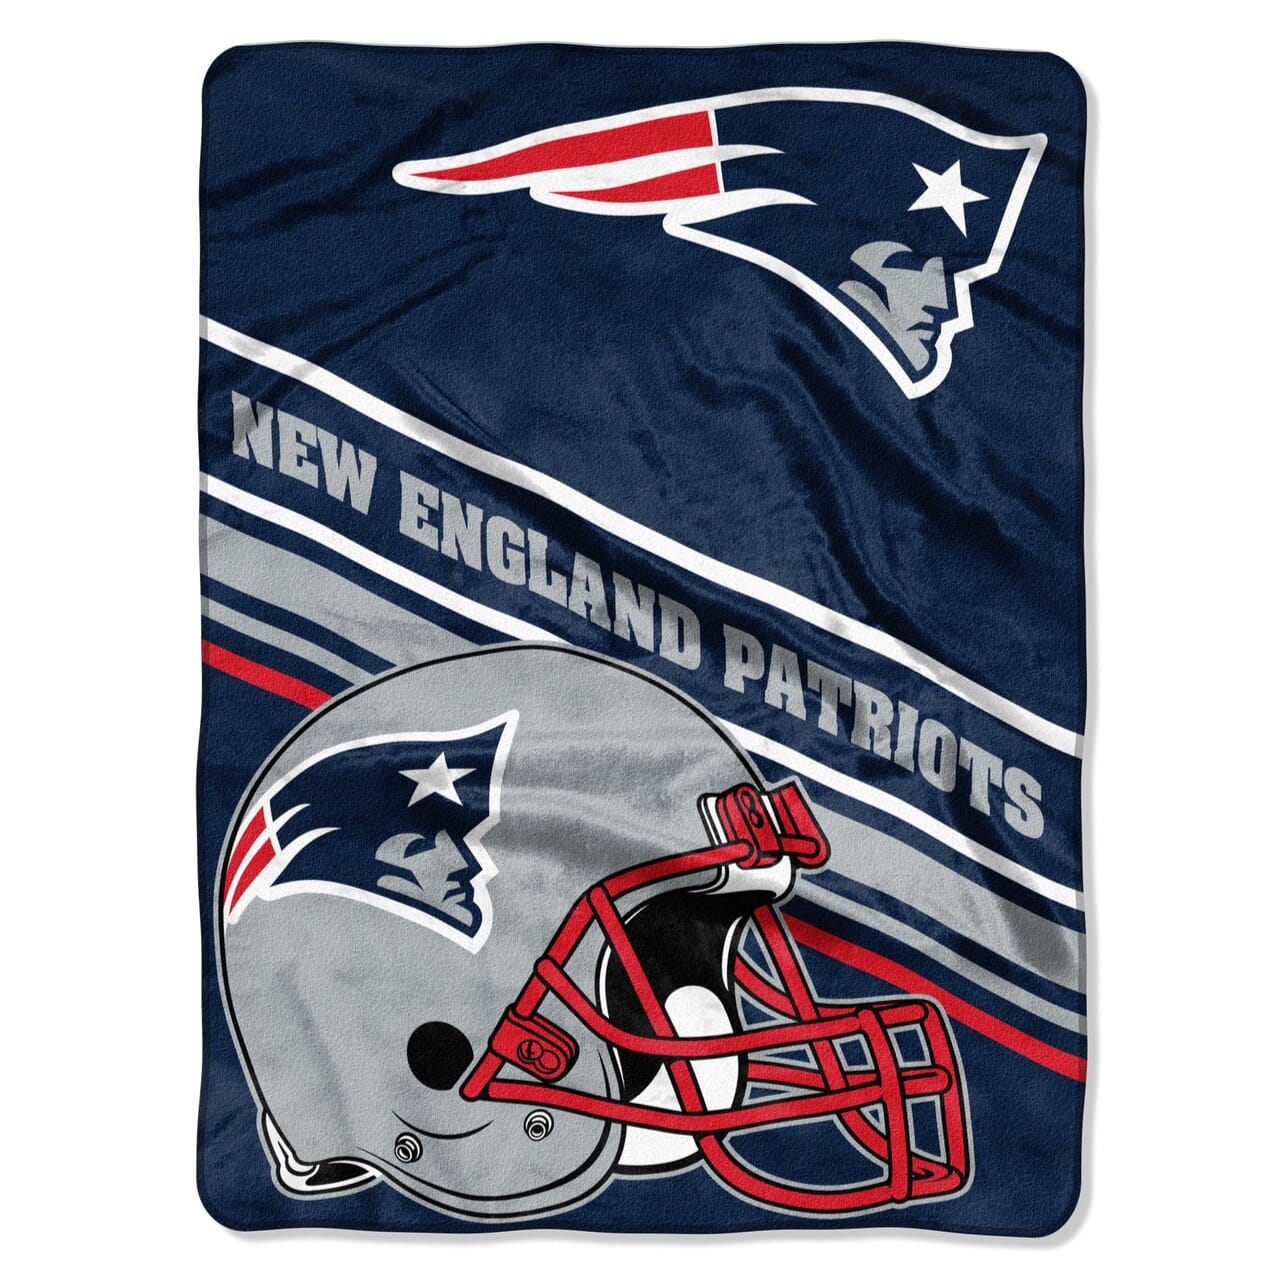 New England Patriots Slant Raschel Blanket